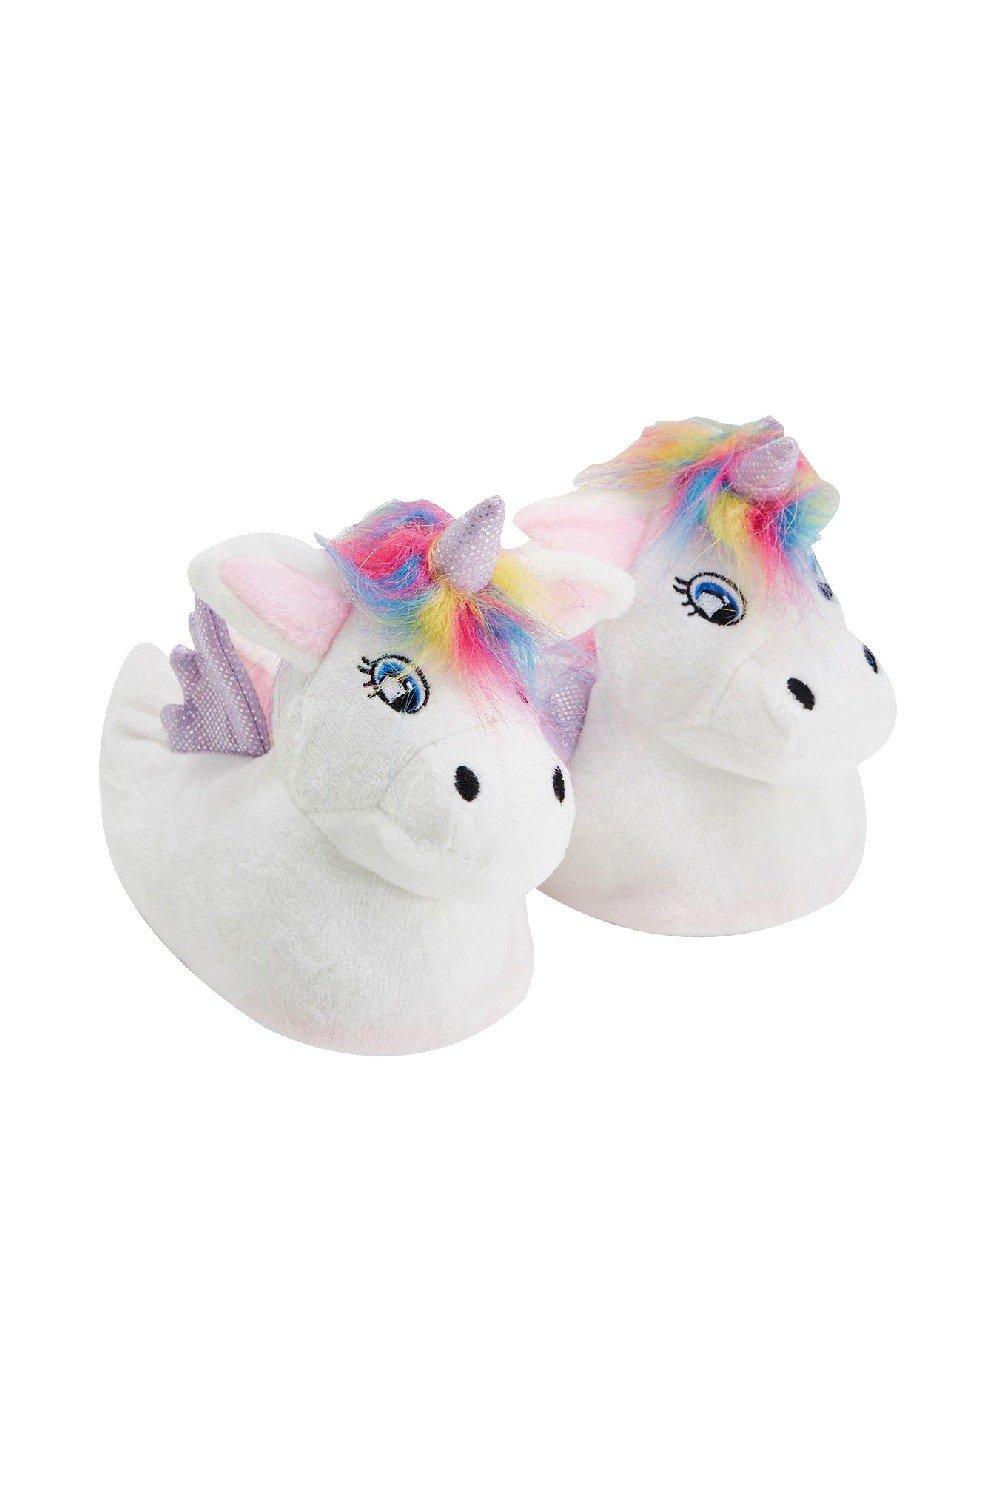 White Unicorn Plush Slippers Gift for Christmas